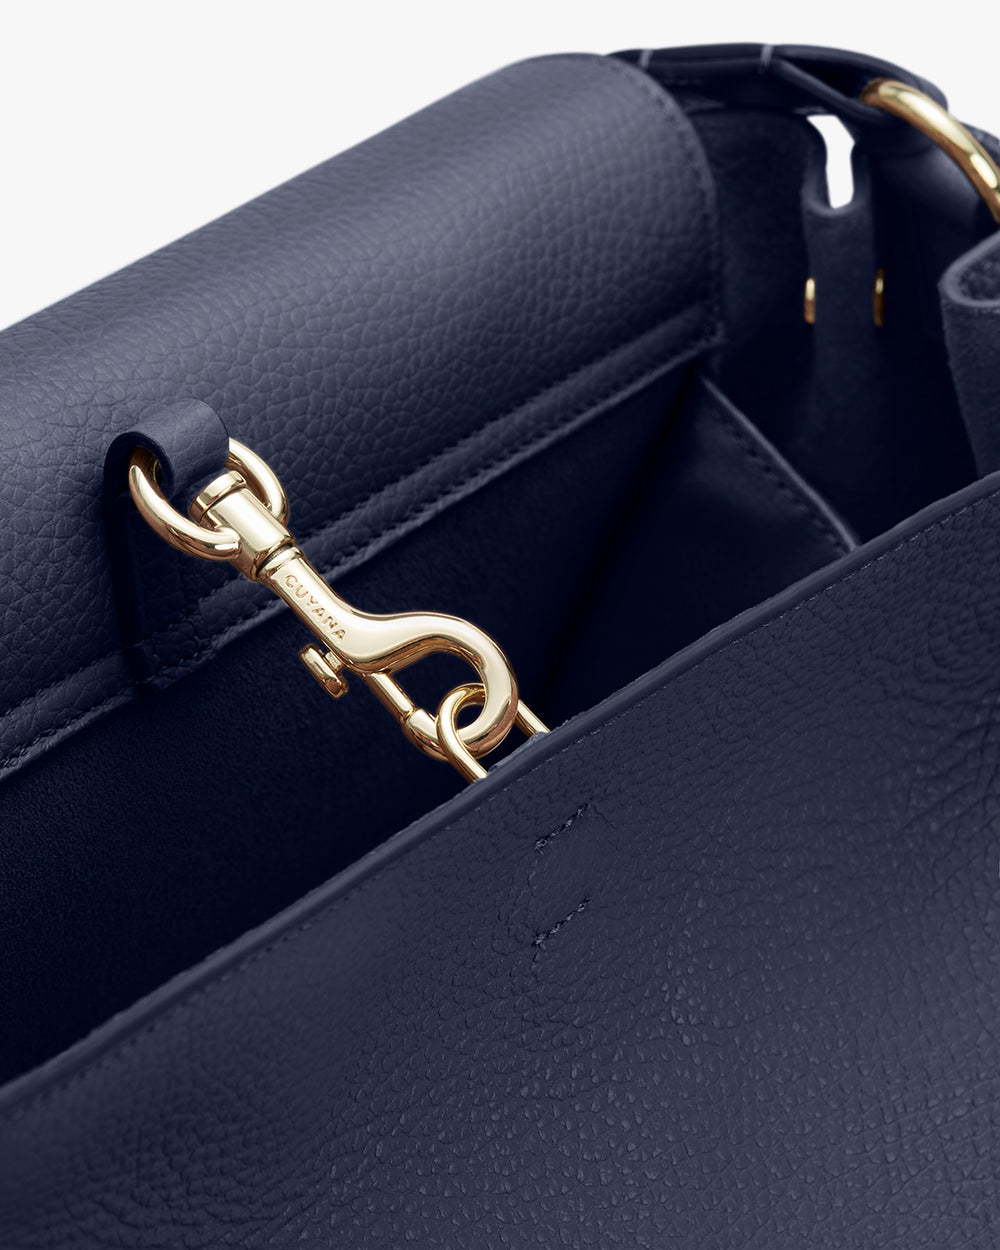 Close-up of a handbag with a metal clasp.